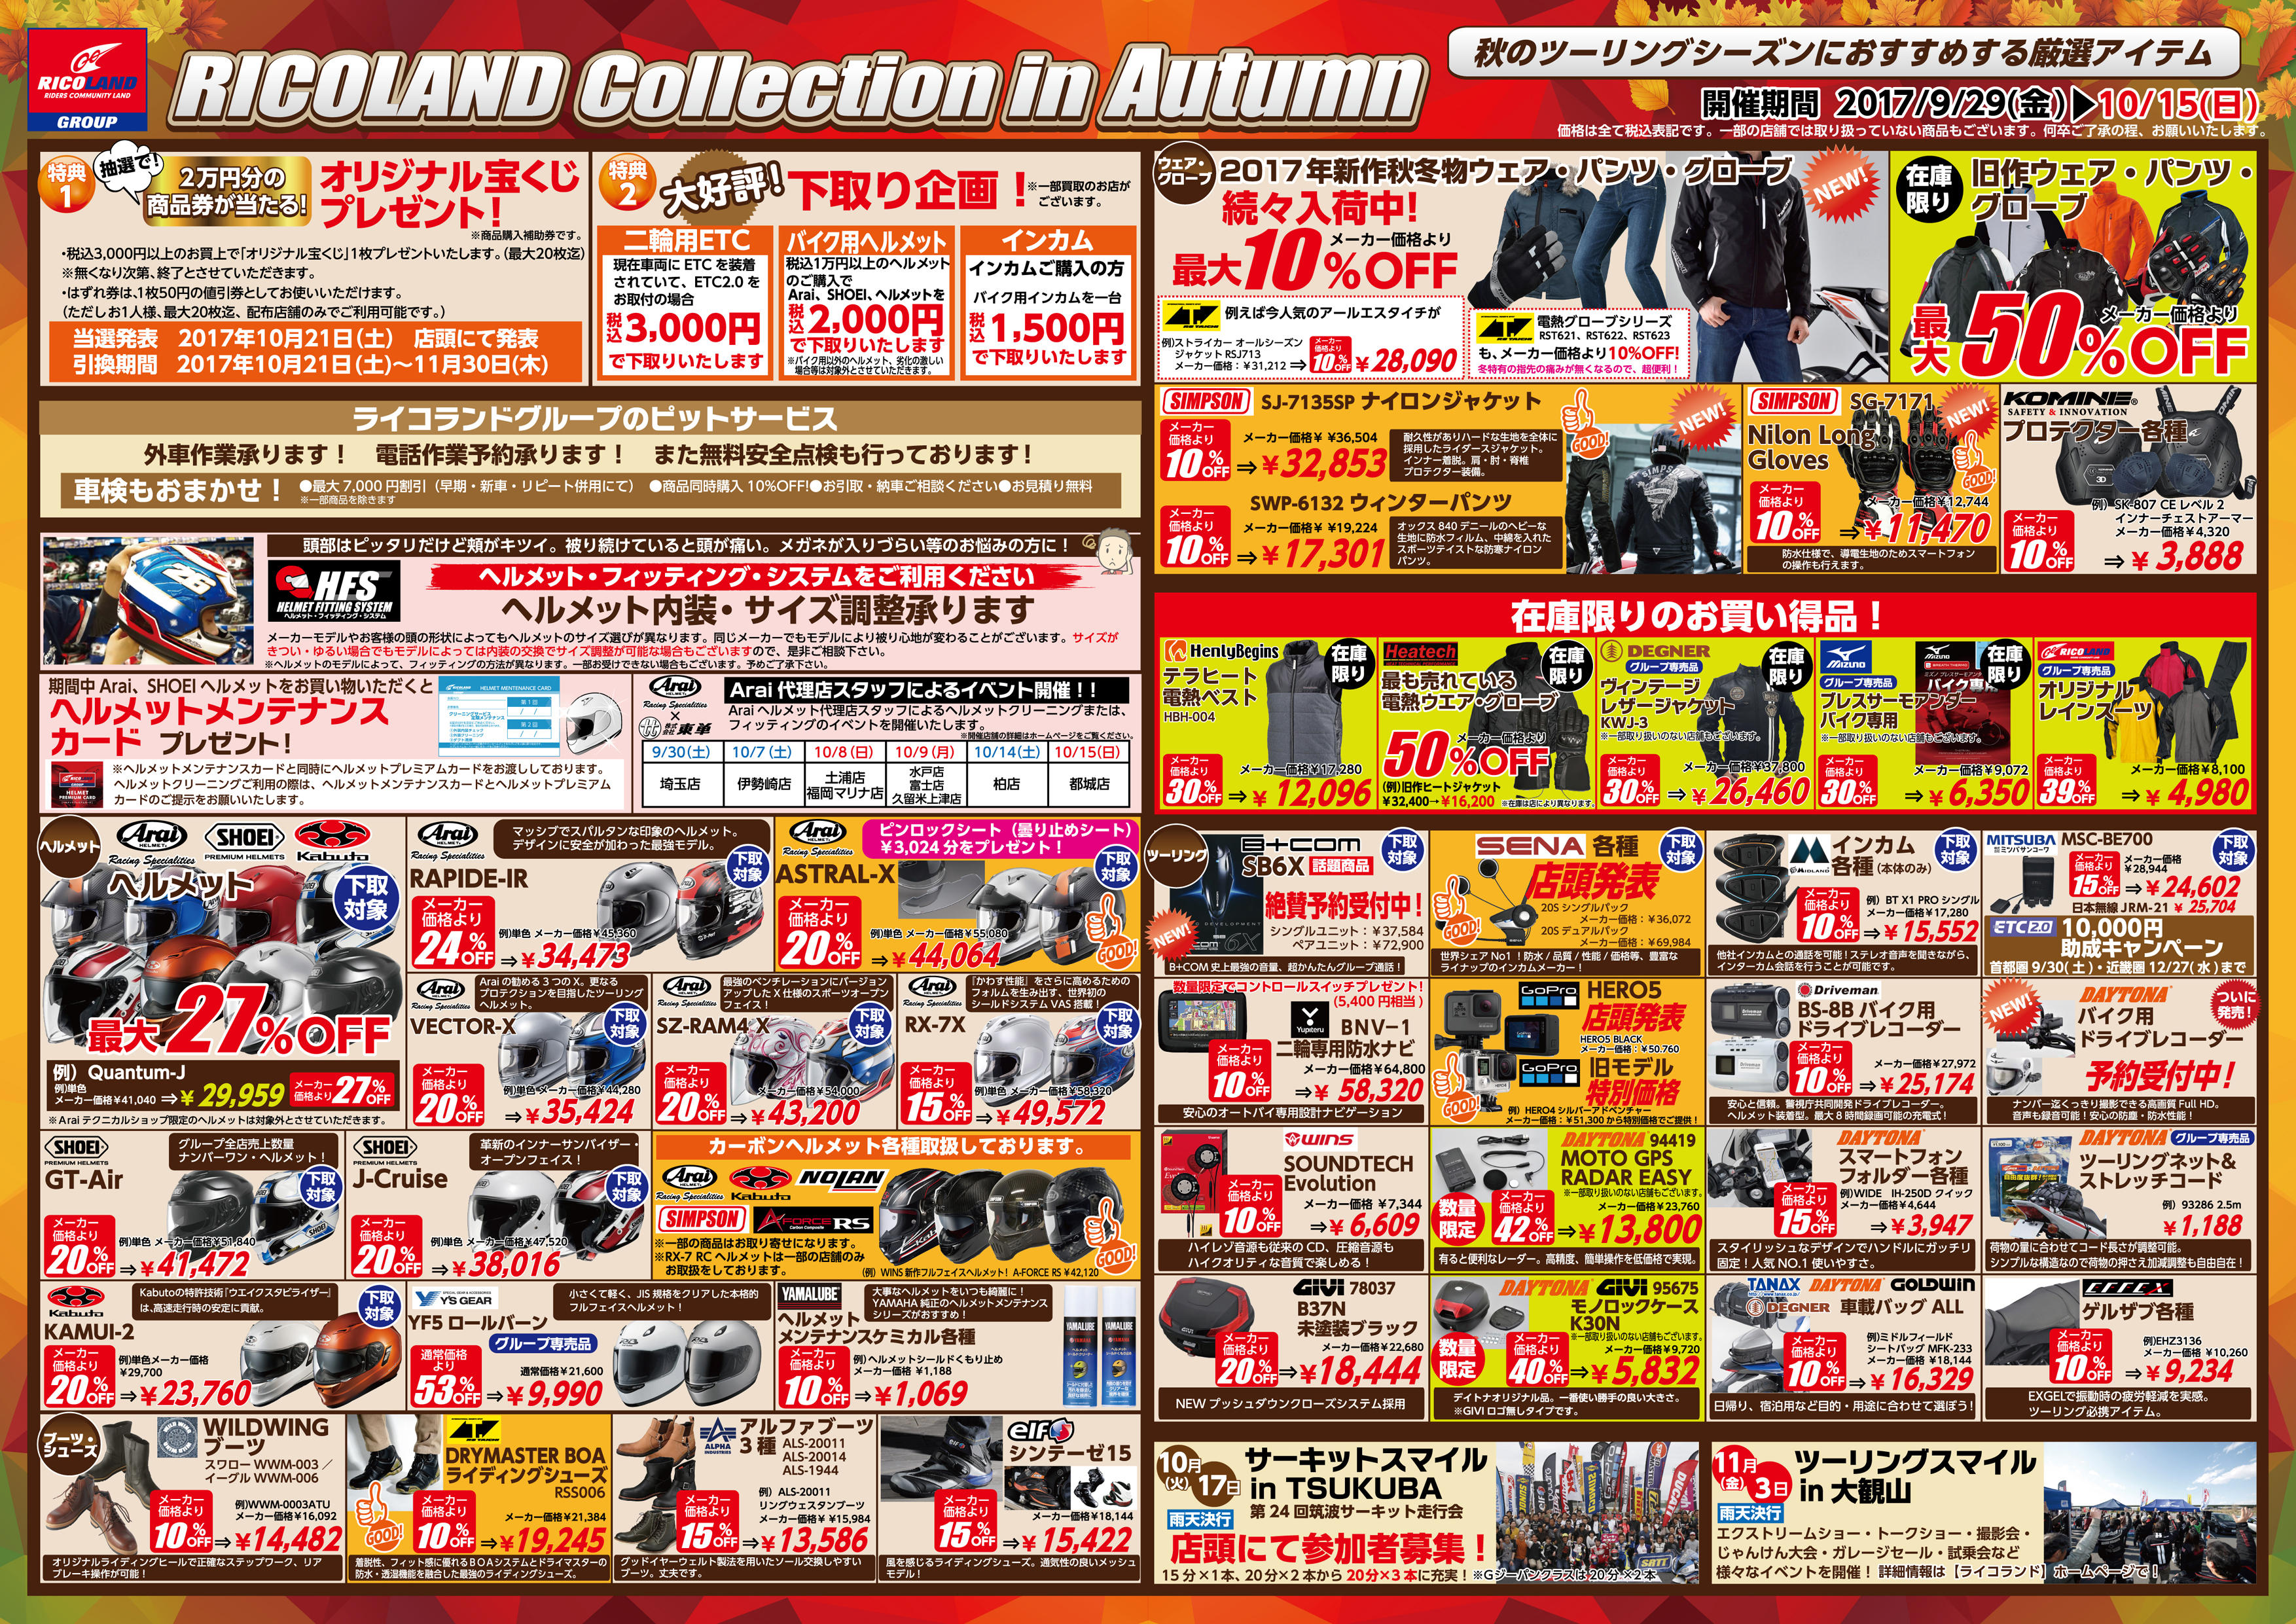 http://www.ricoland.co.jp/information/assets/img/outline_chirashi_omoteweb.jpg